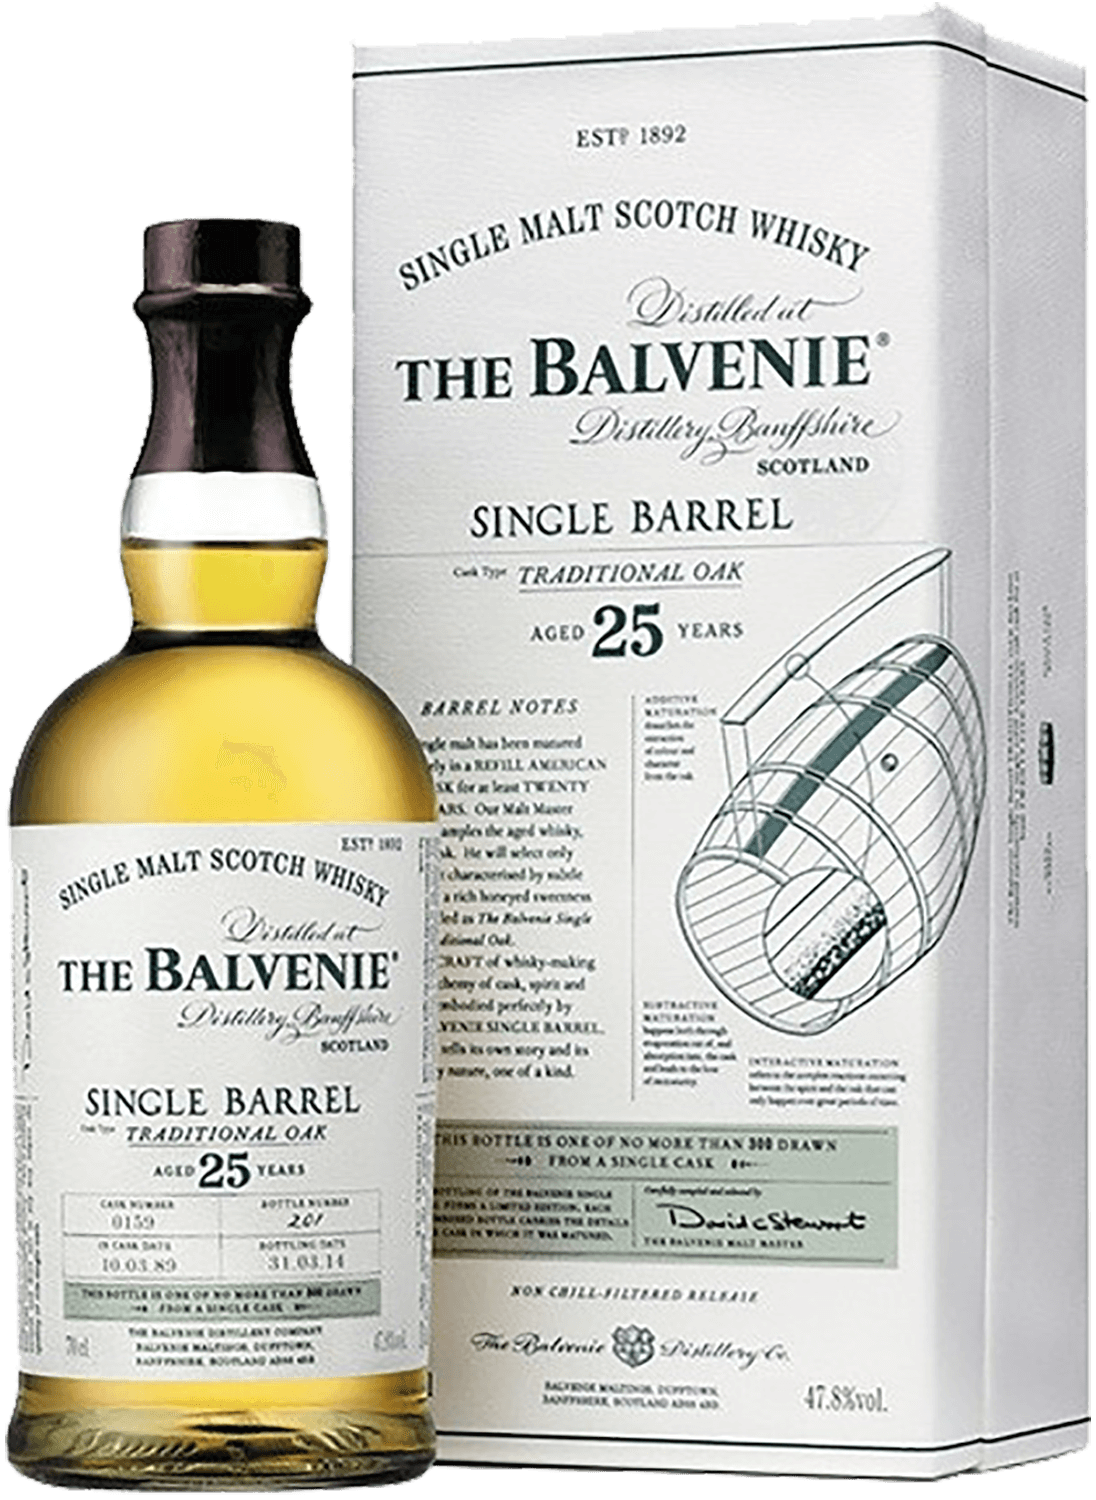 The Balvenie Single Barrel 25 y.o. Single Malt Scotch Whisky (gift box)